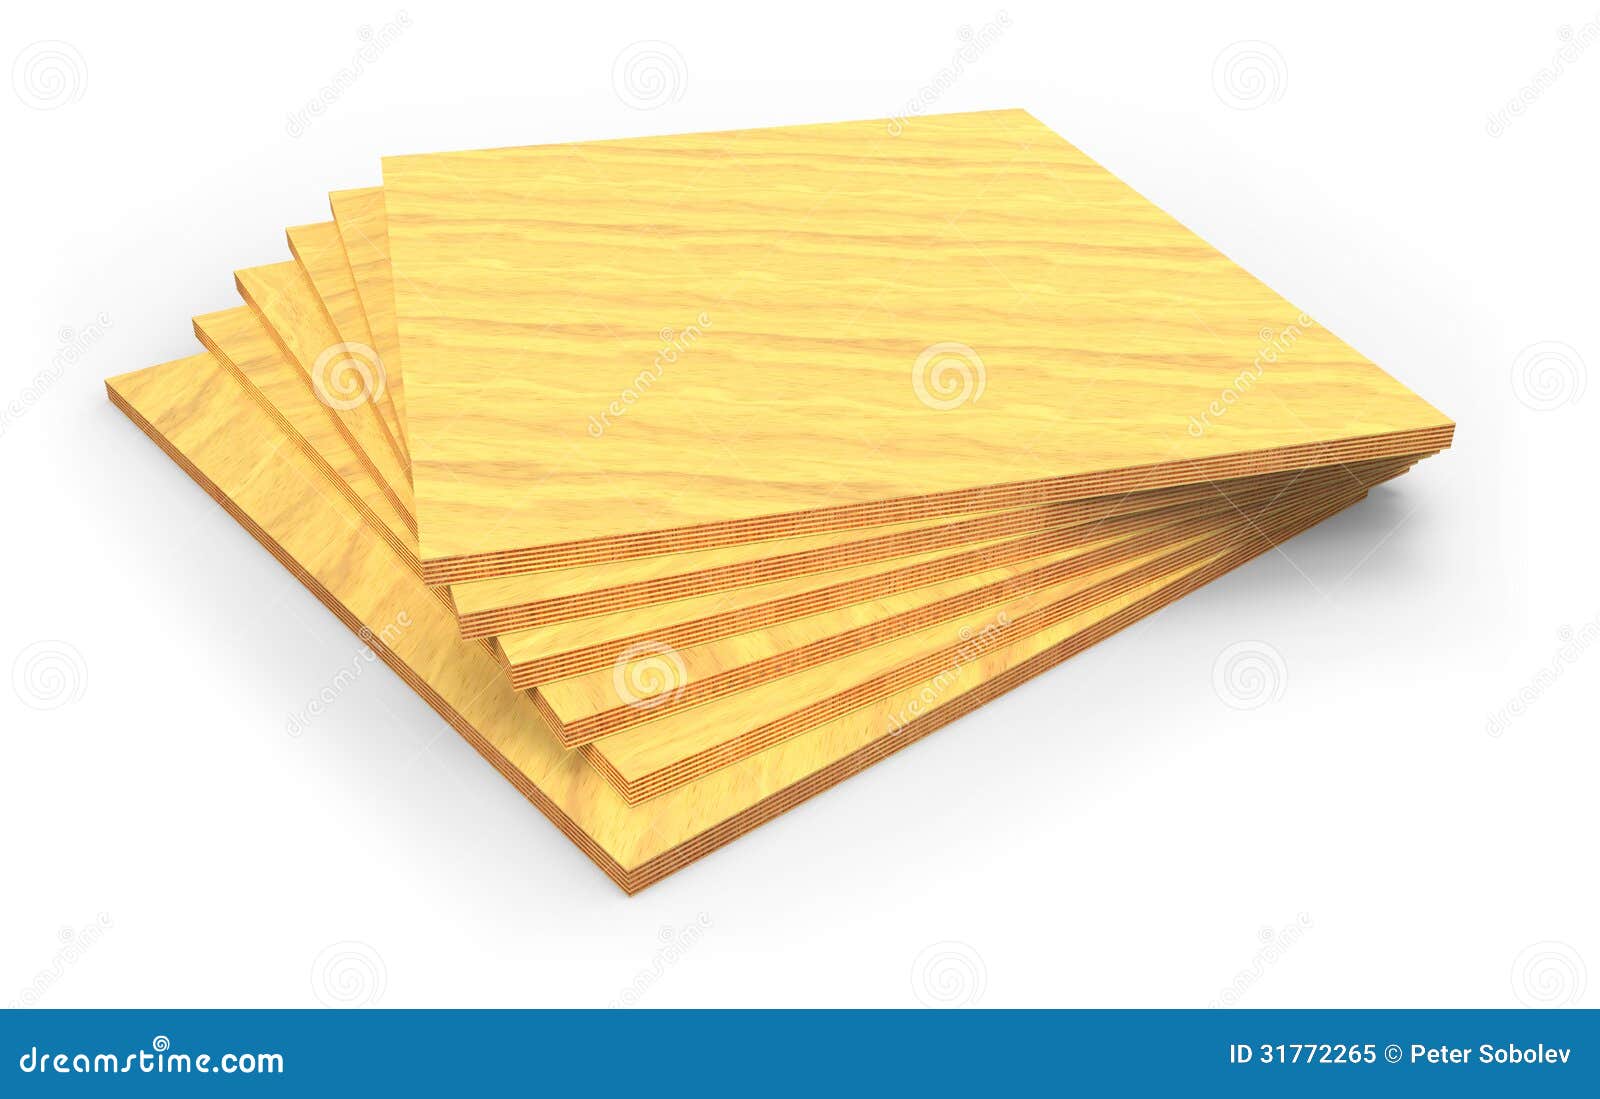 Plywood sheet samples stock illustration. Illustration of ...